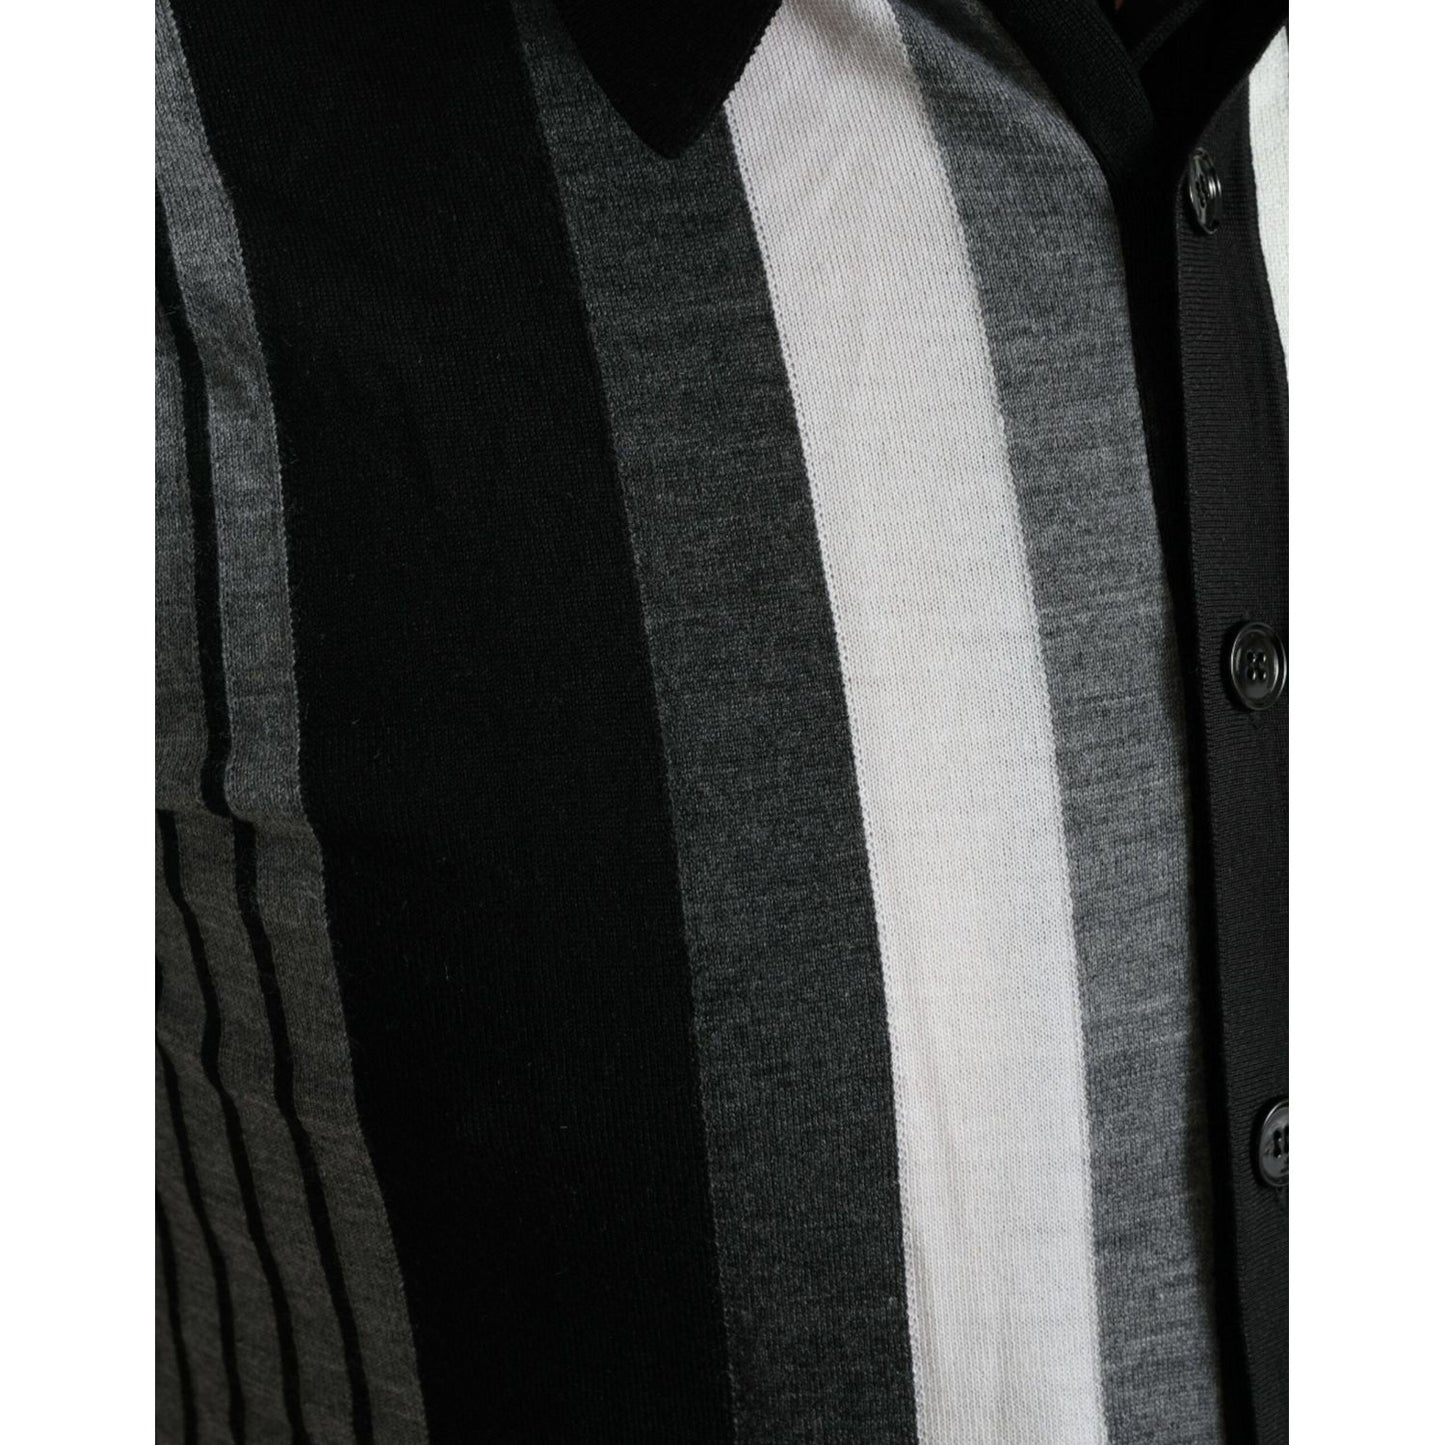 Dolce & Gabbana Elegant Striped Silk Blend Cardigan black-white-jumper-cardigan-polo-sweater